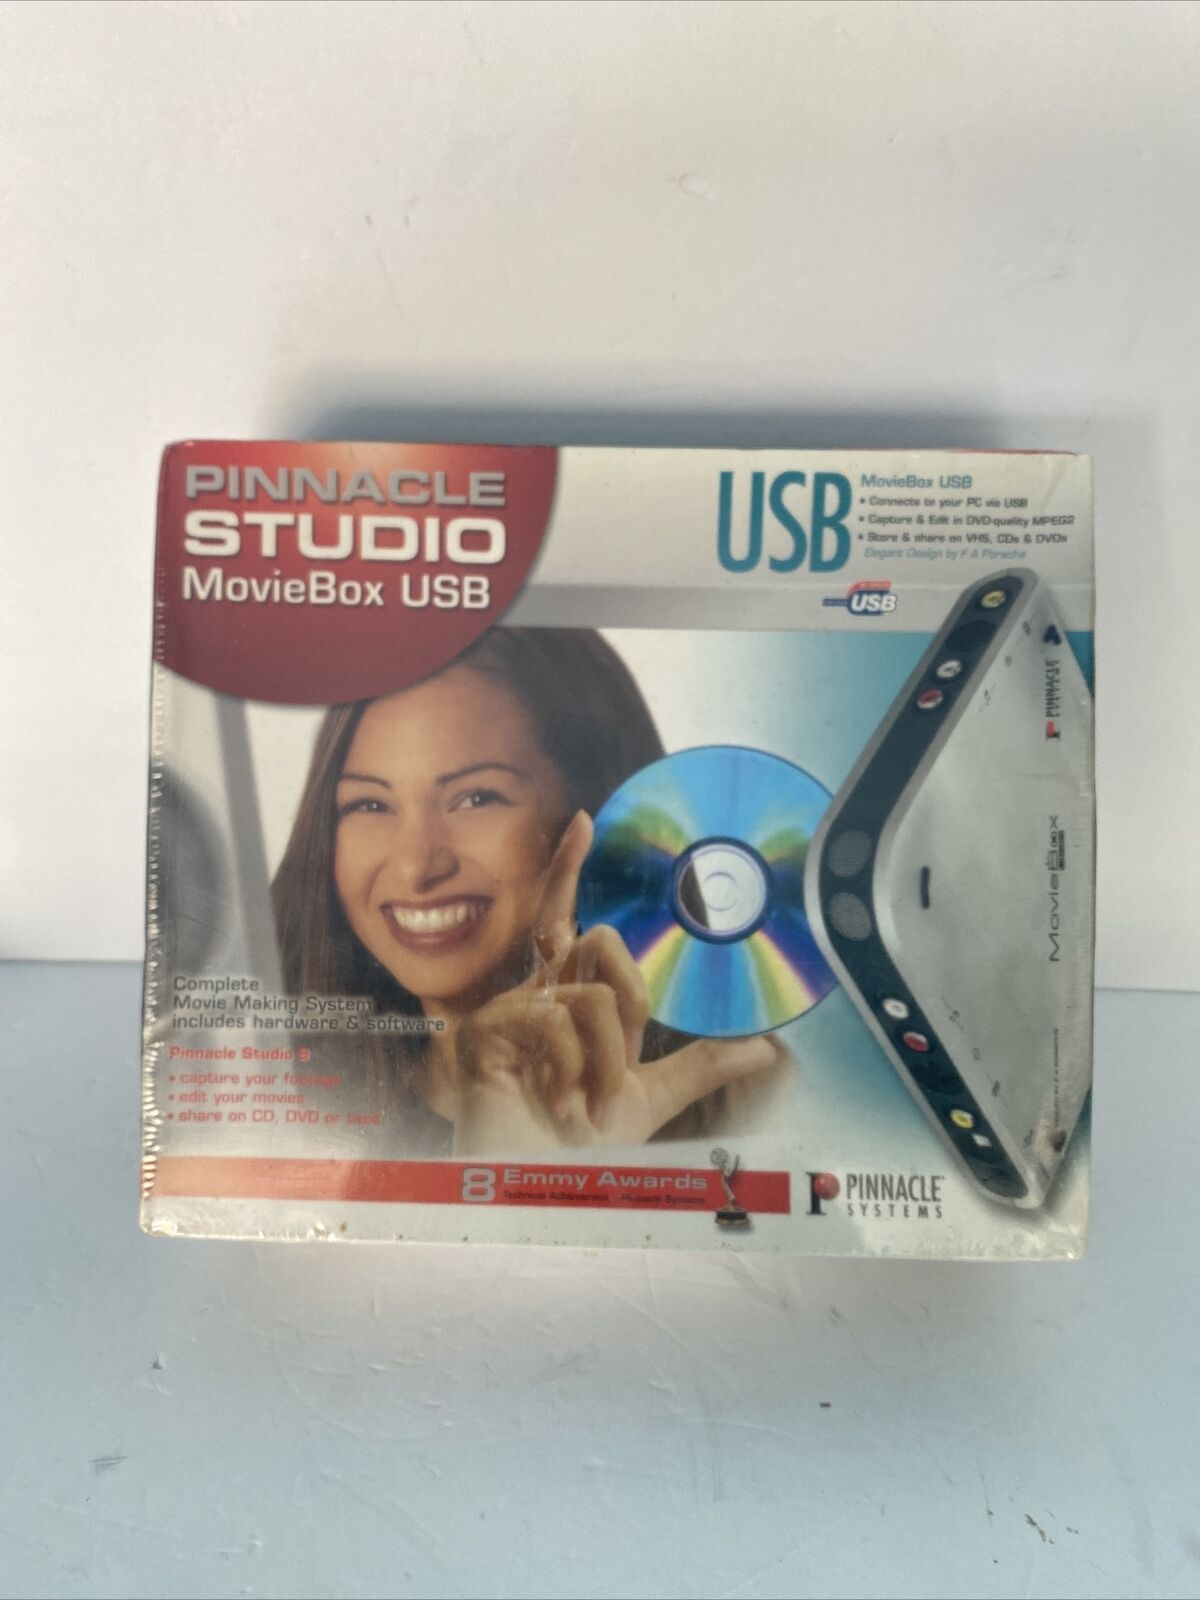 NEW Pinnacle Studio 8 MovieBox USB Video Capture Device w/accessories-unopened